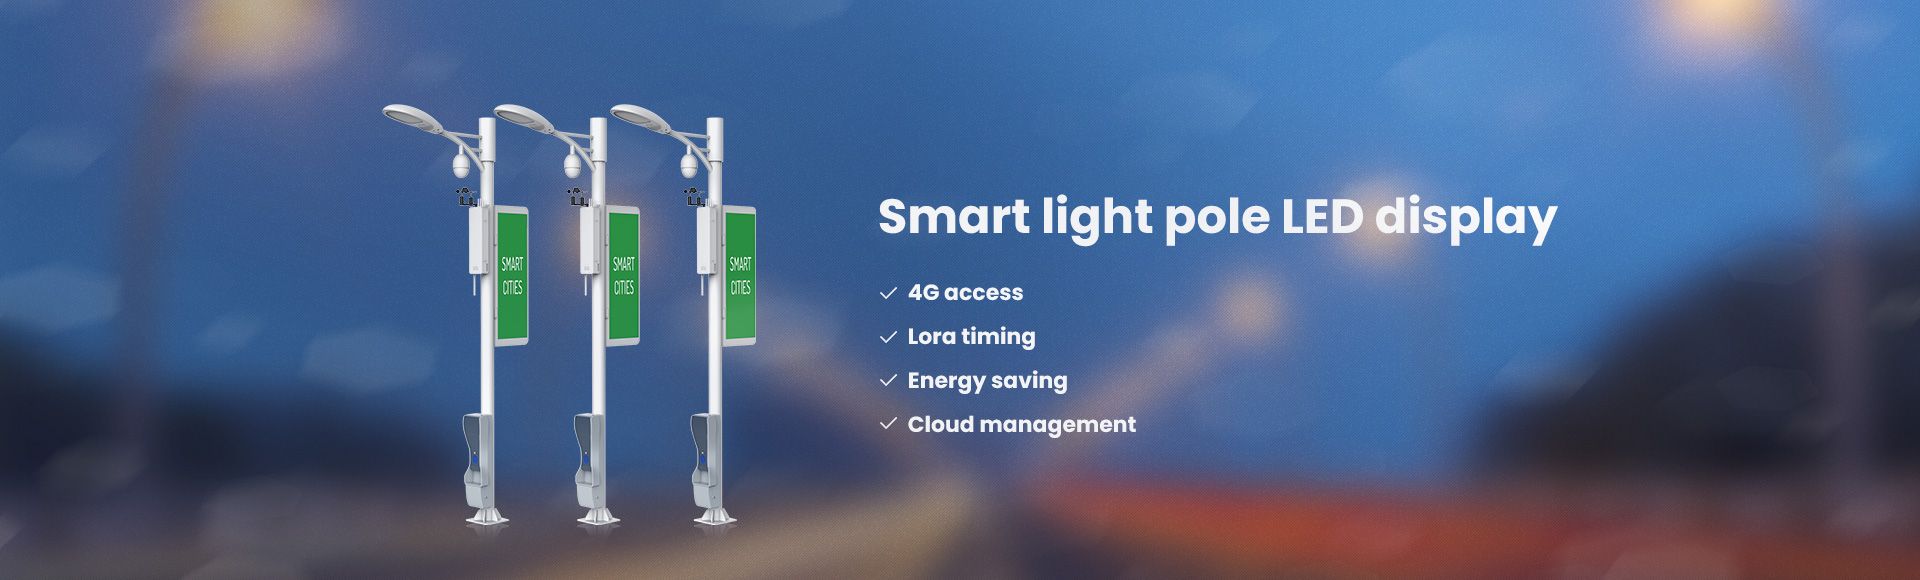 HXTECH SL smart light pole LED display